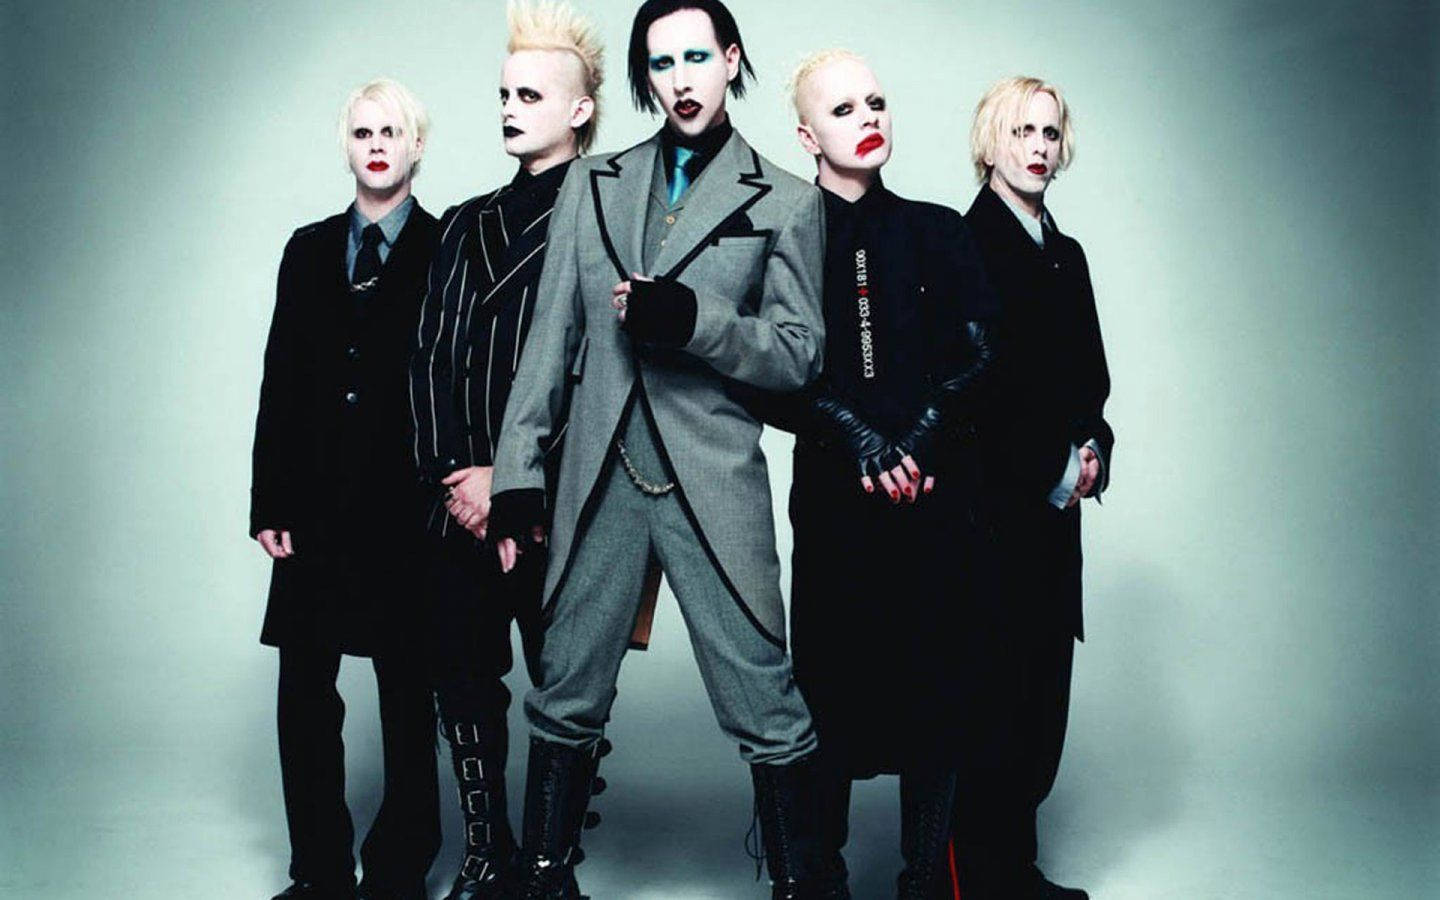 Singer-songwriter Marilyn Manson Goes Against The Grain Of Popular Culture